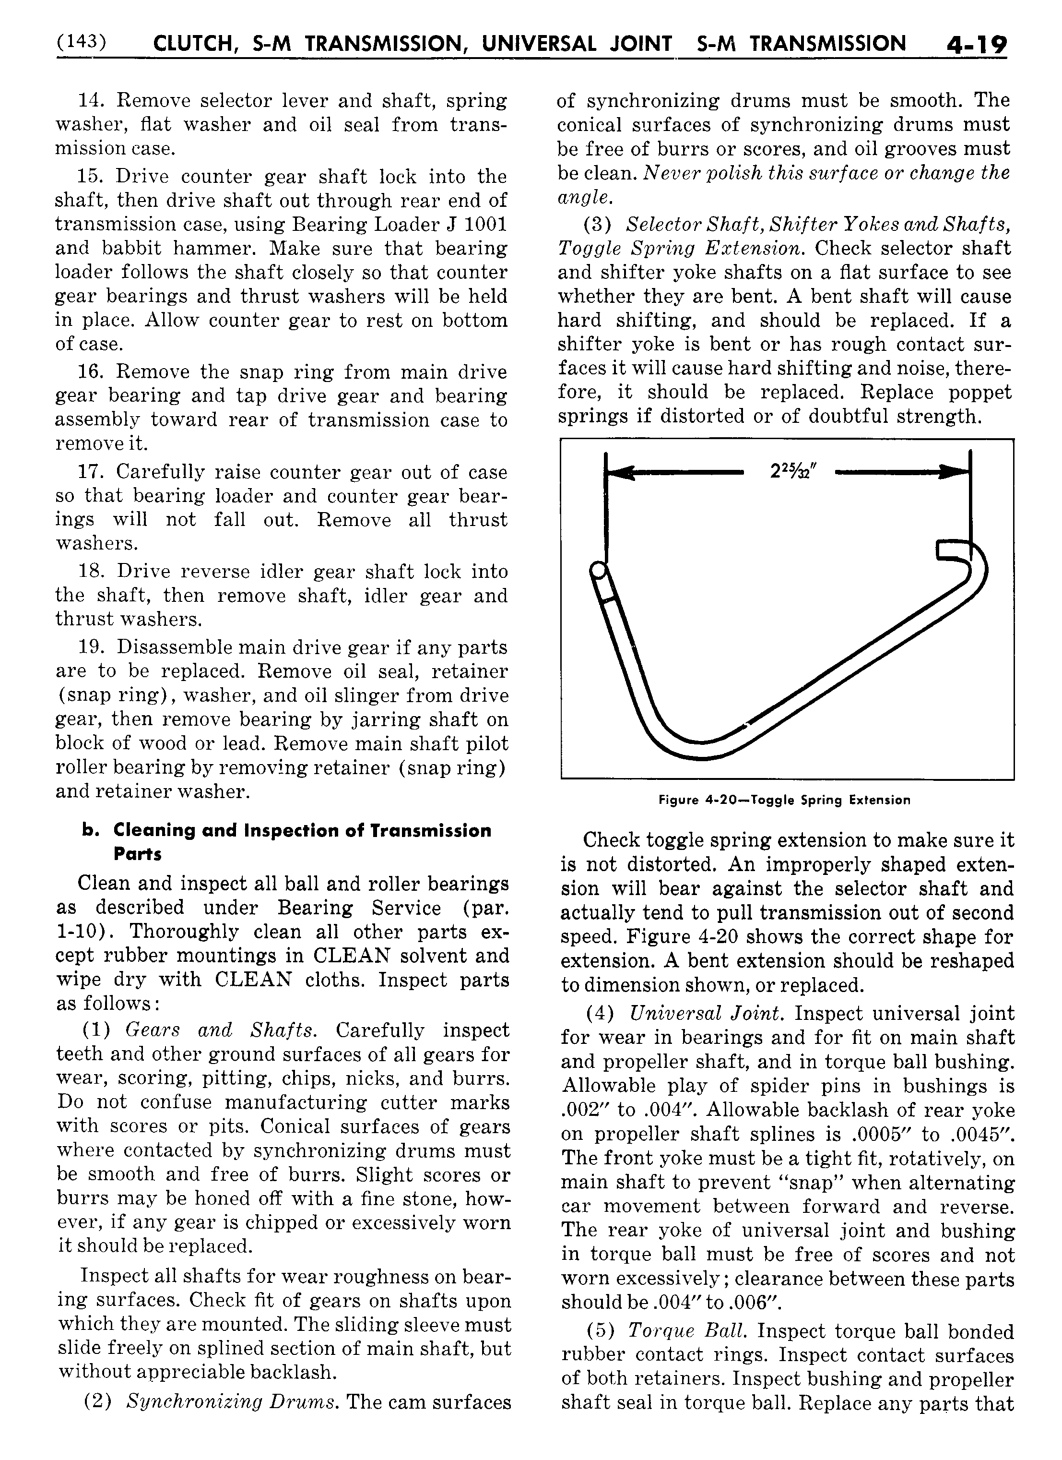 n_05 1956 Buick Shop Manual - Clutch & Trans-019-019.jpg